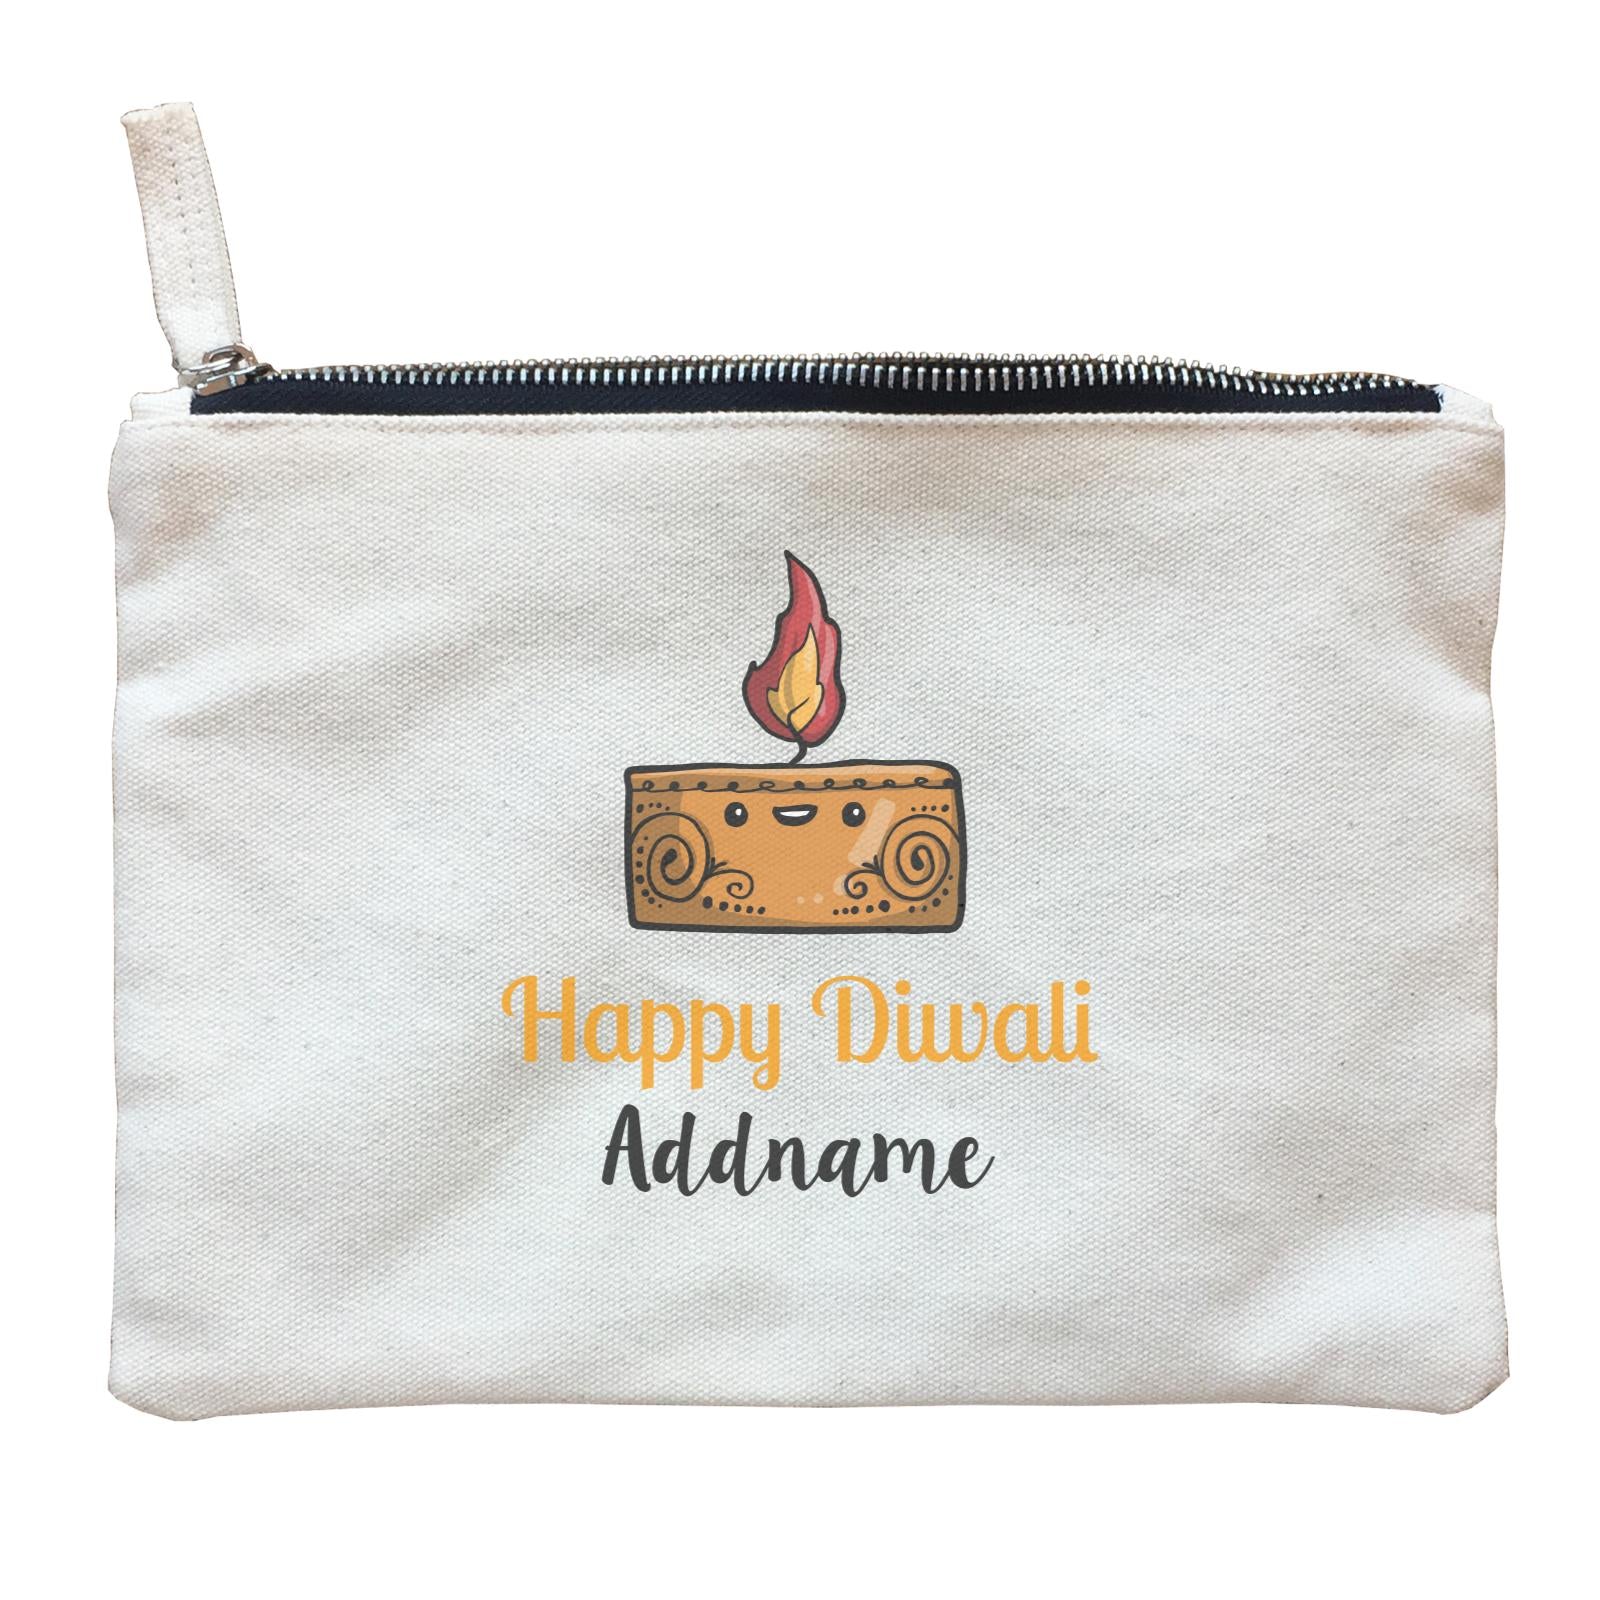 Cute Rectangle Diyas Happy Diwali Addname Zipper Pouch